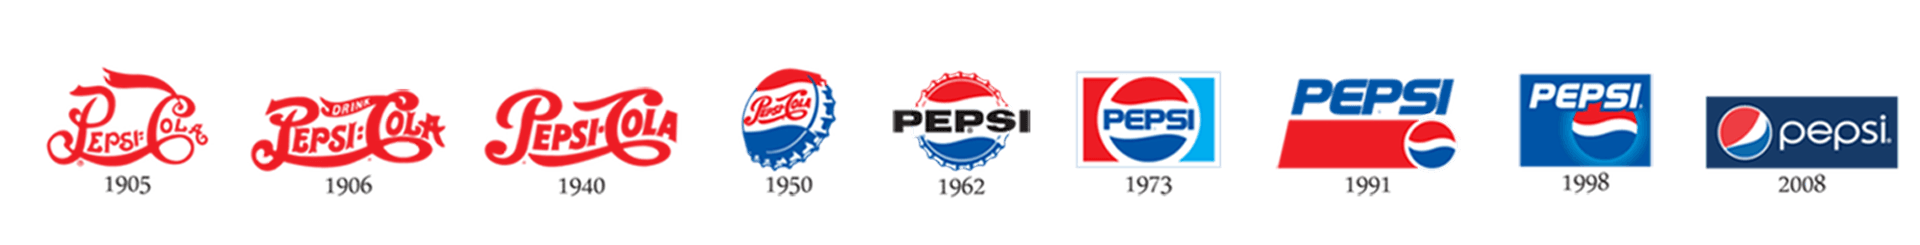 Pepsi 2017 Logo - Admiral | Beverage